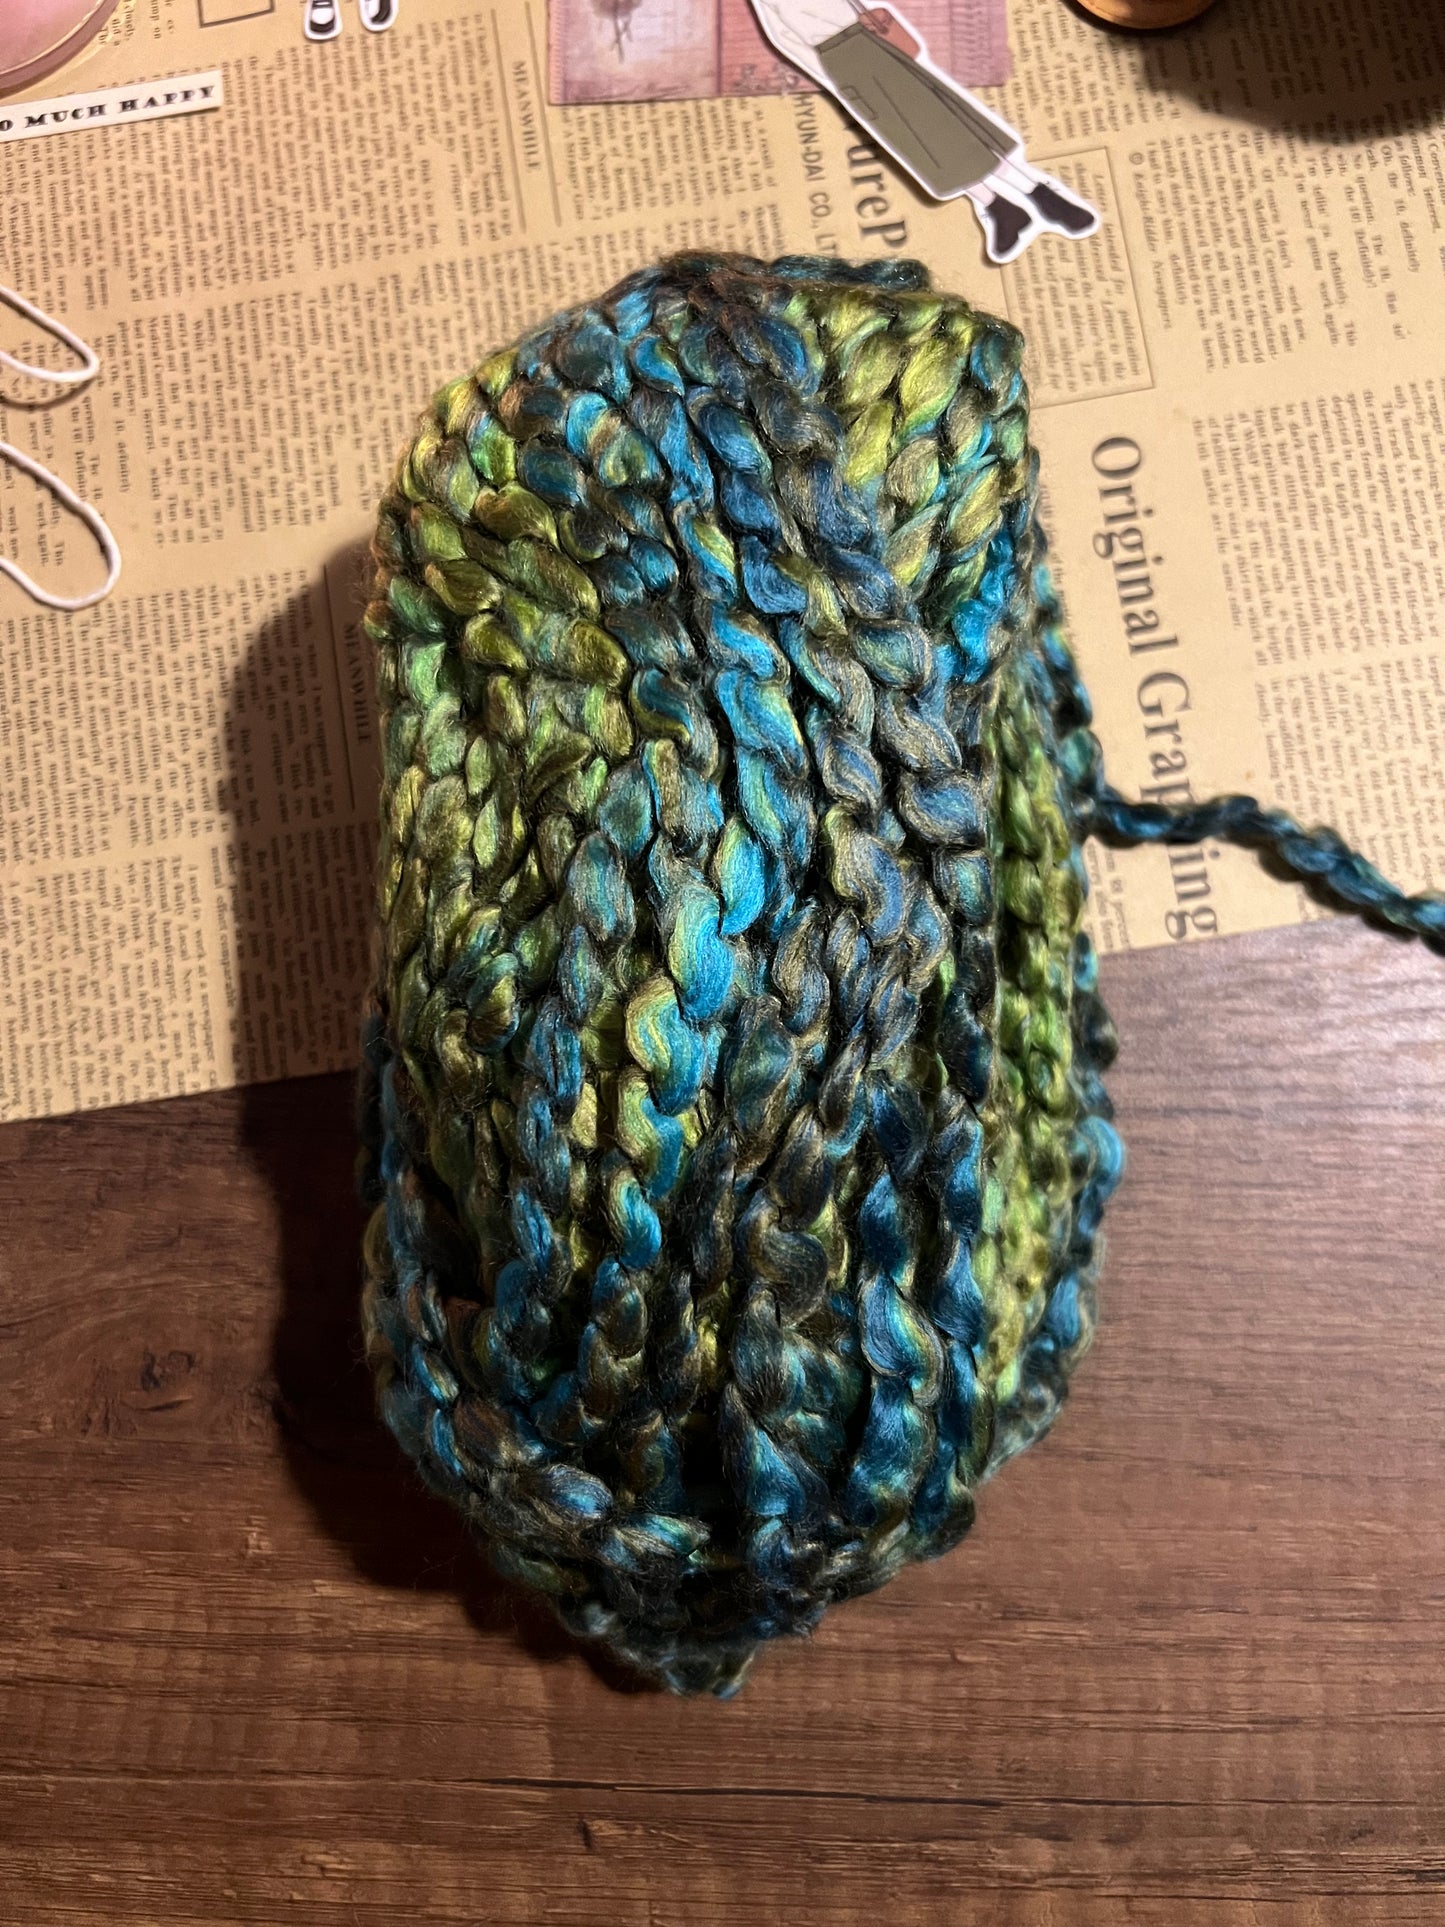 The Fluffy Scarf Crochet Kit